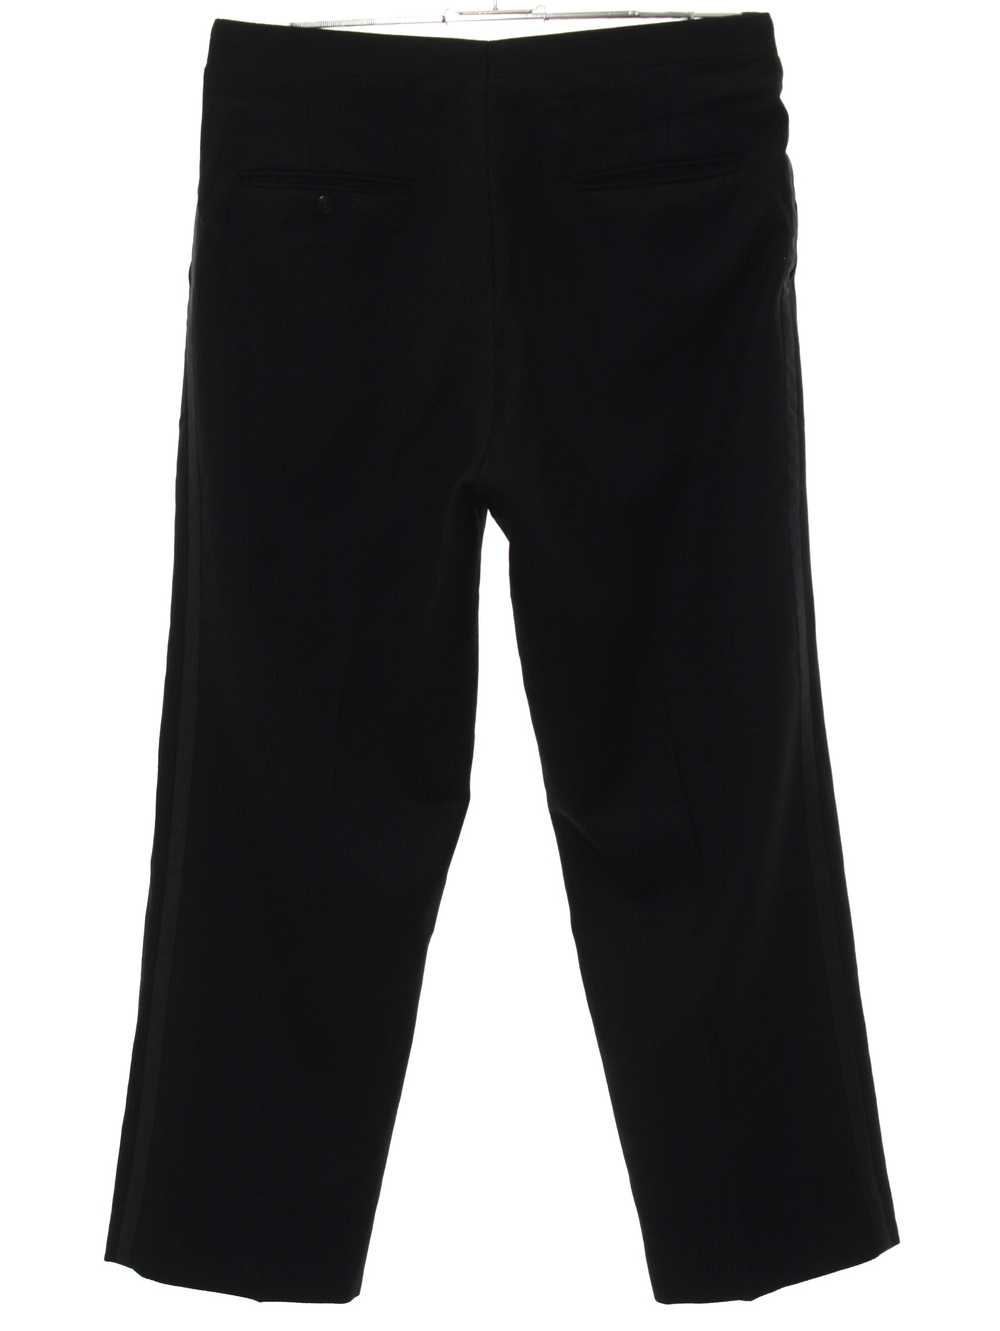 1980's Mens Black Tuxedo Pants - image 3